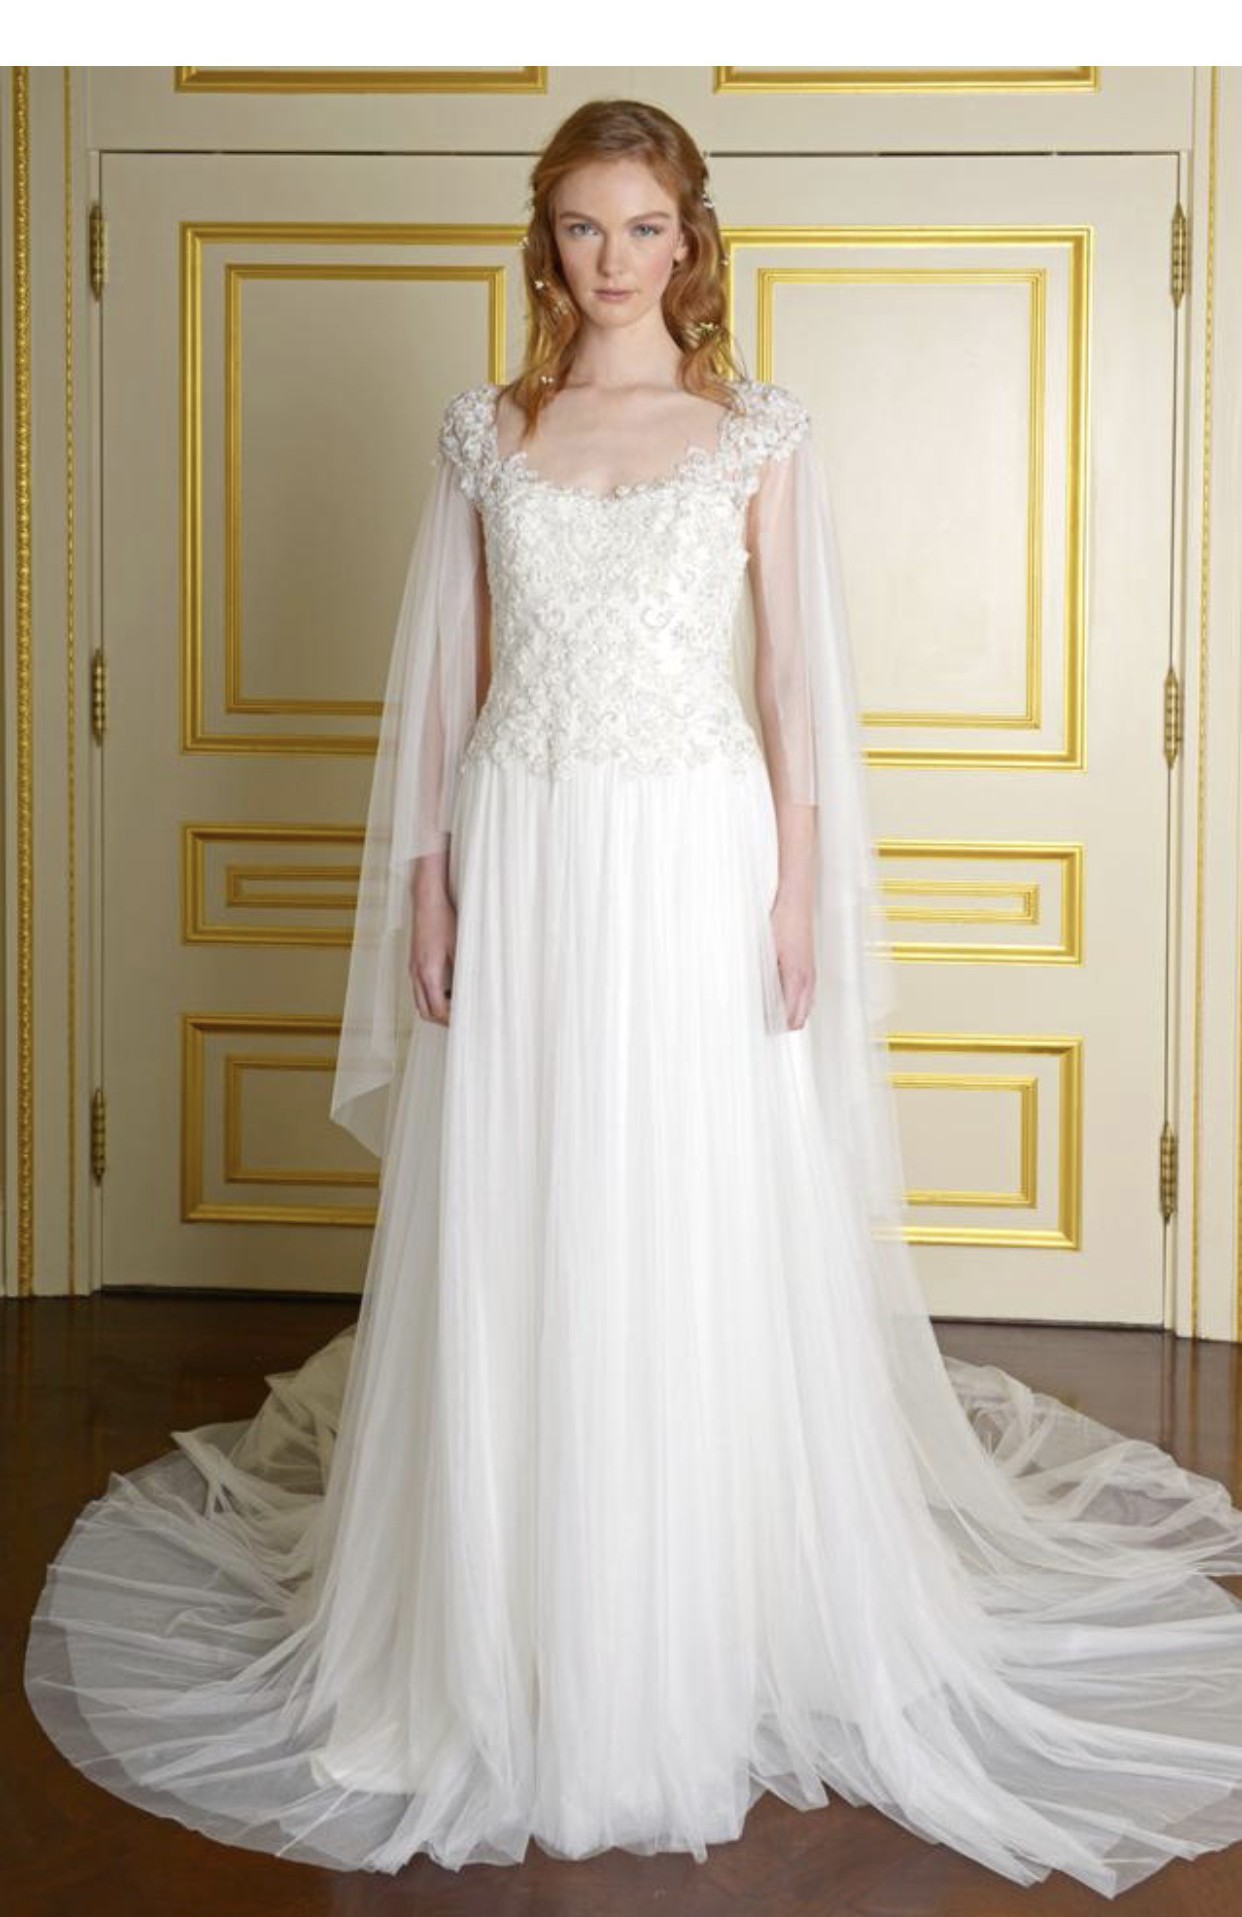 Marchesa Authentic wedding dress New Wedding Dress Save 88% - Stillwhite